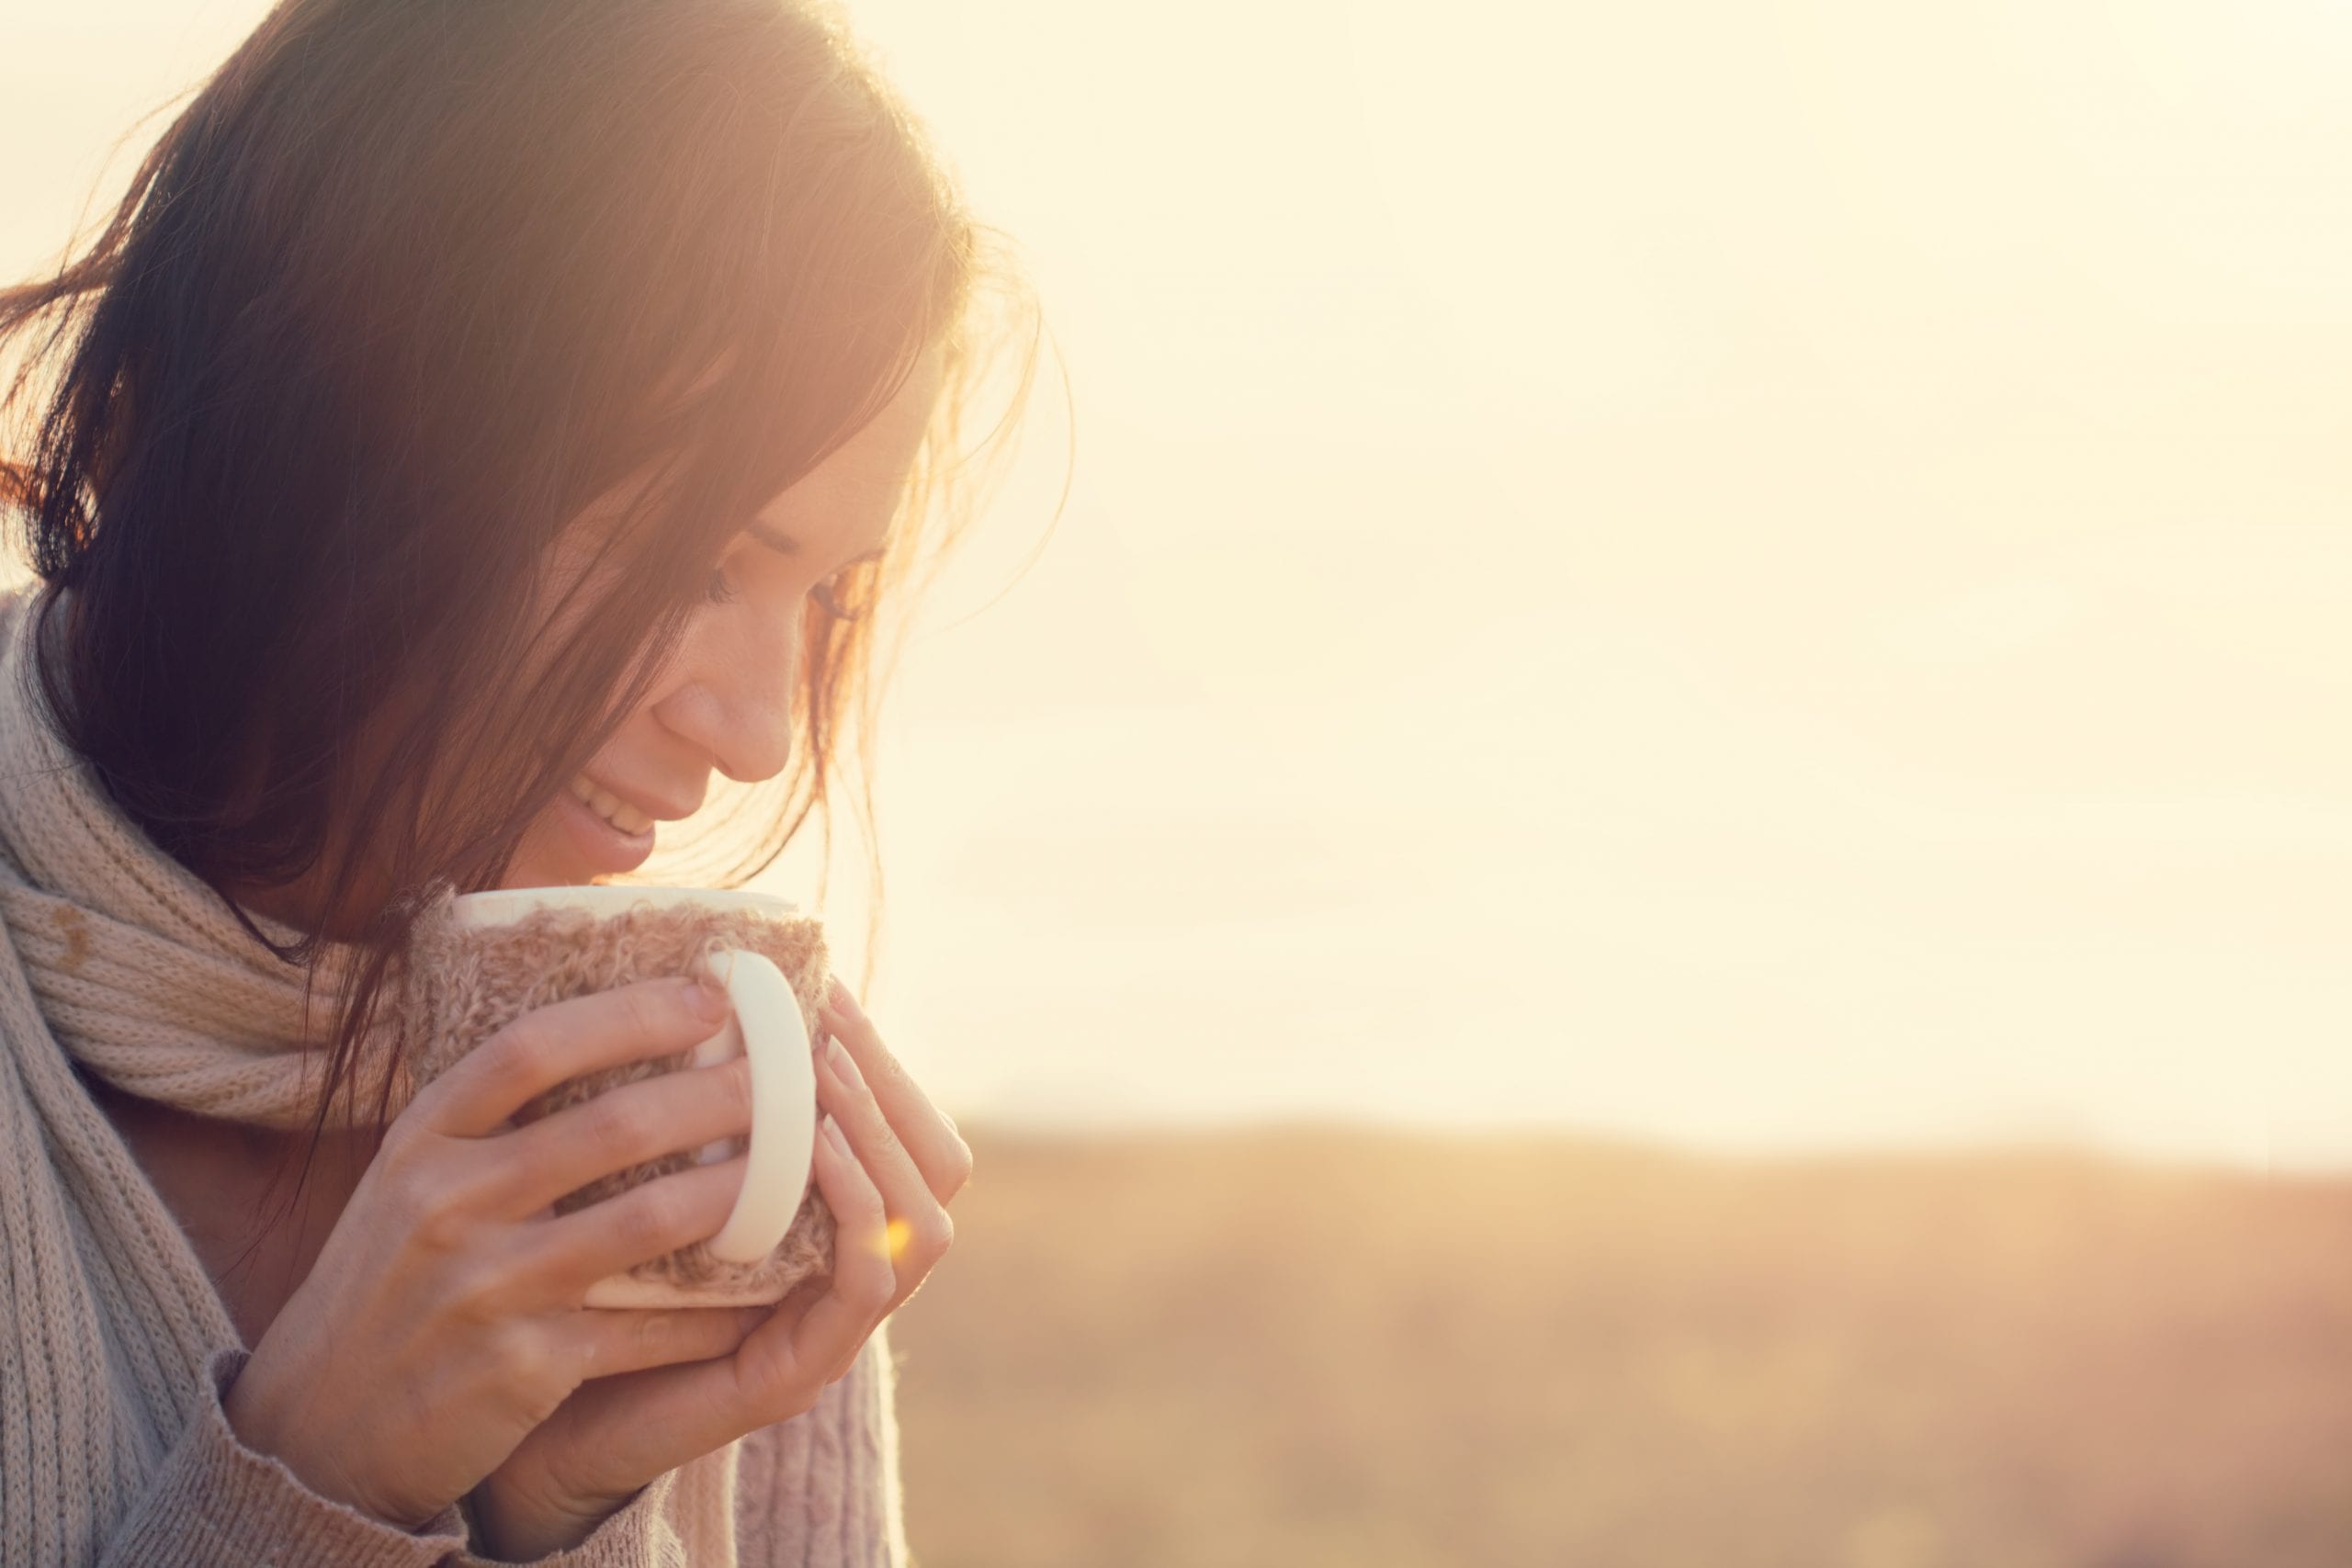 Woman holding mug self soothing anxieties away